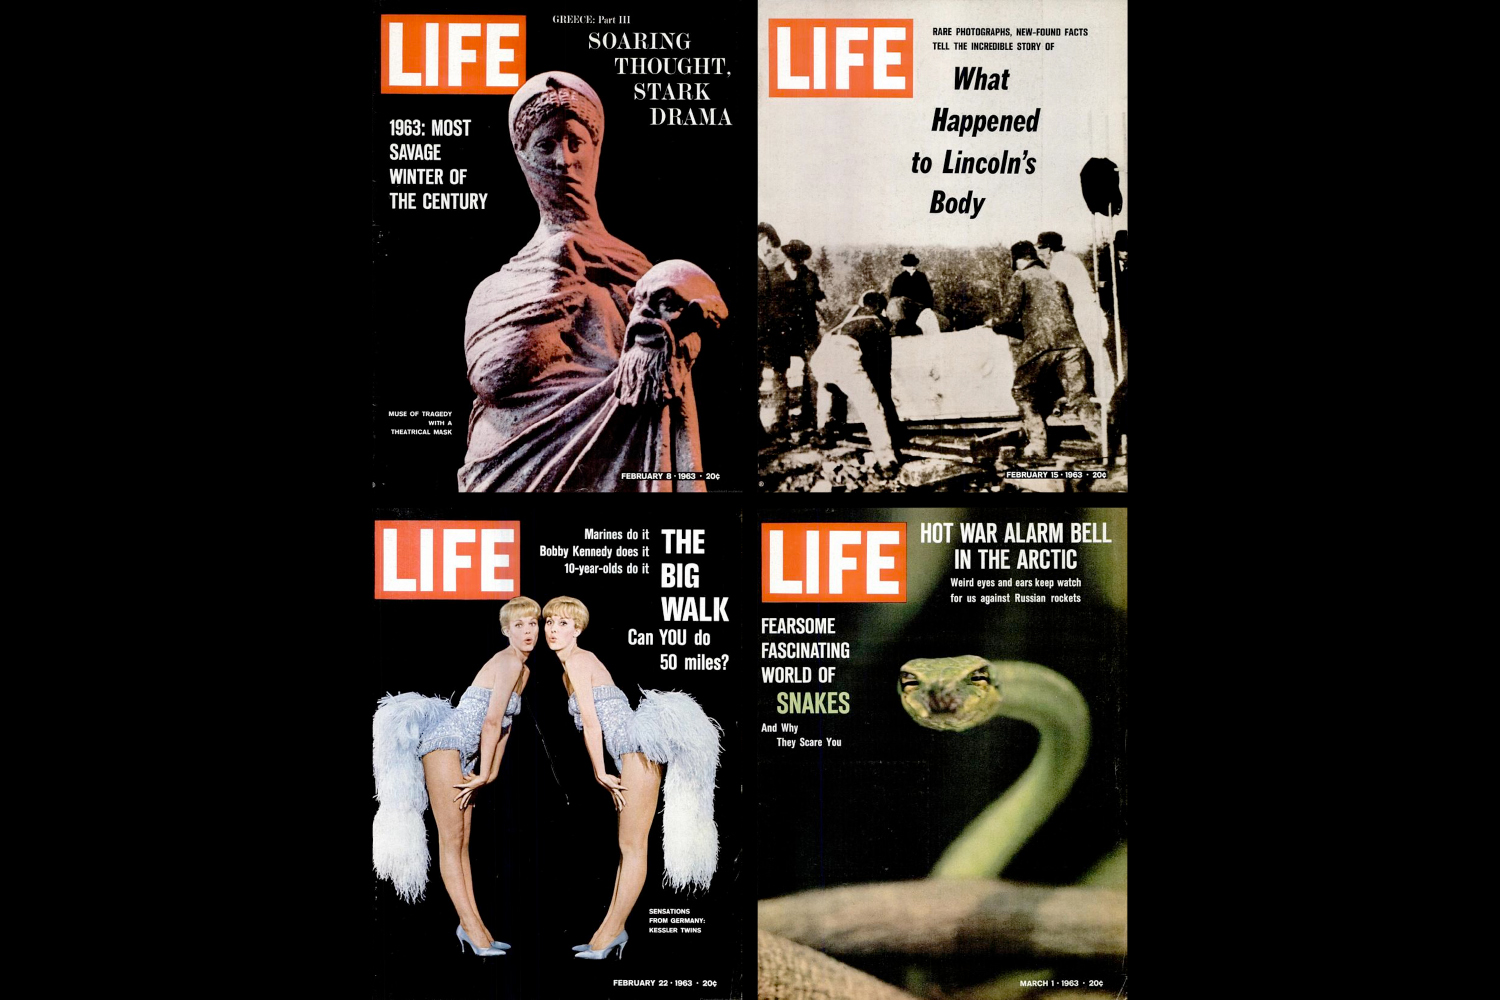 LIFE magazine, February 8 - March 1, 1963